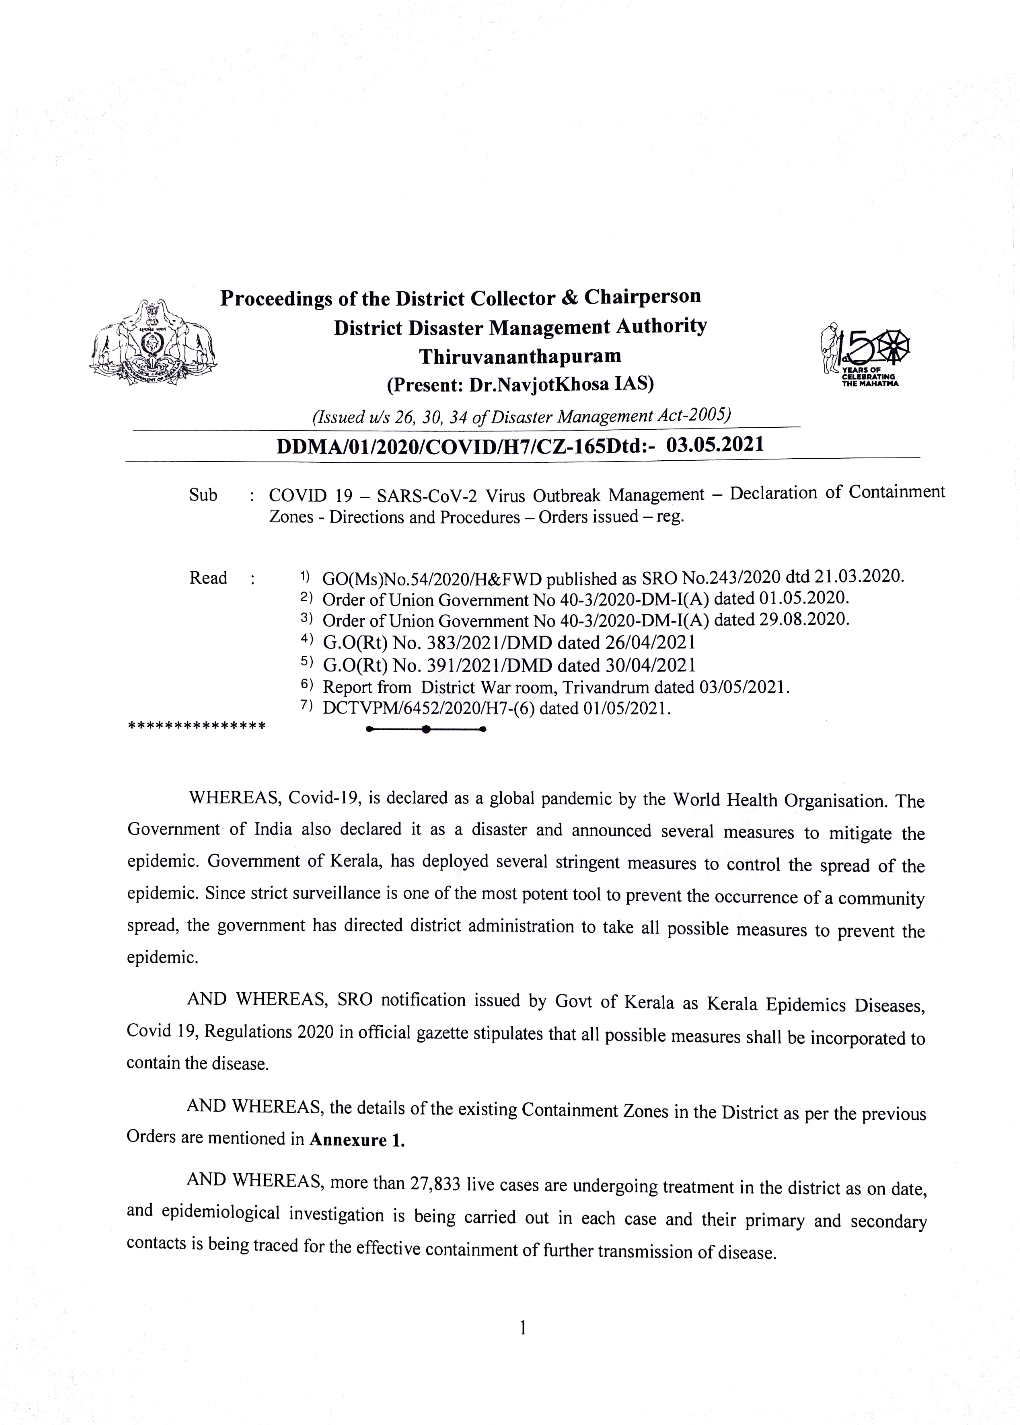 District Disaster Management Authority Thiruvananthapuram